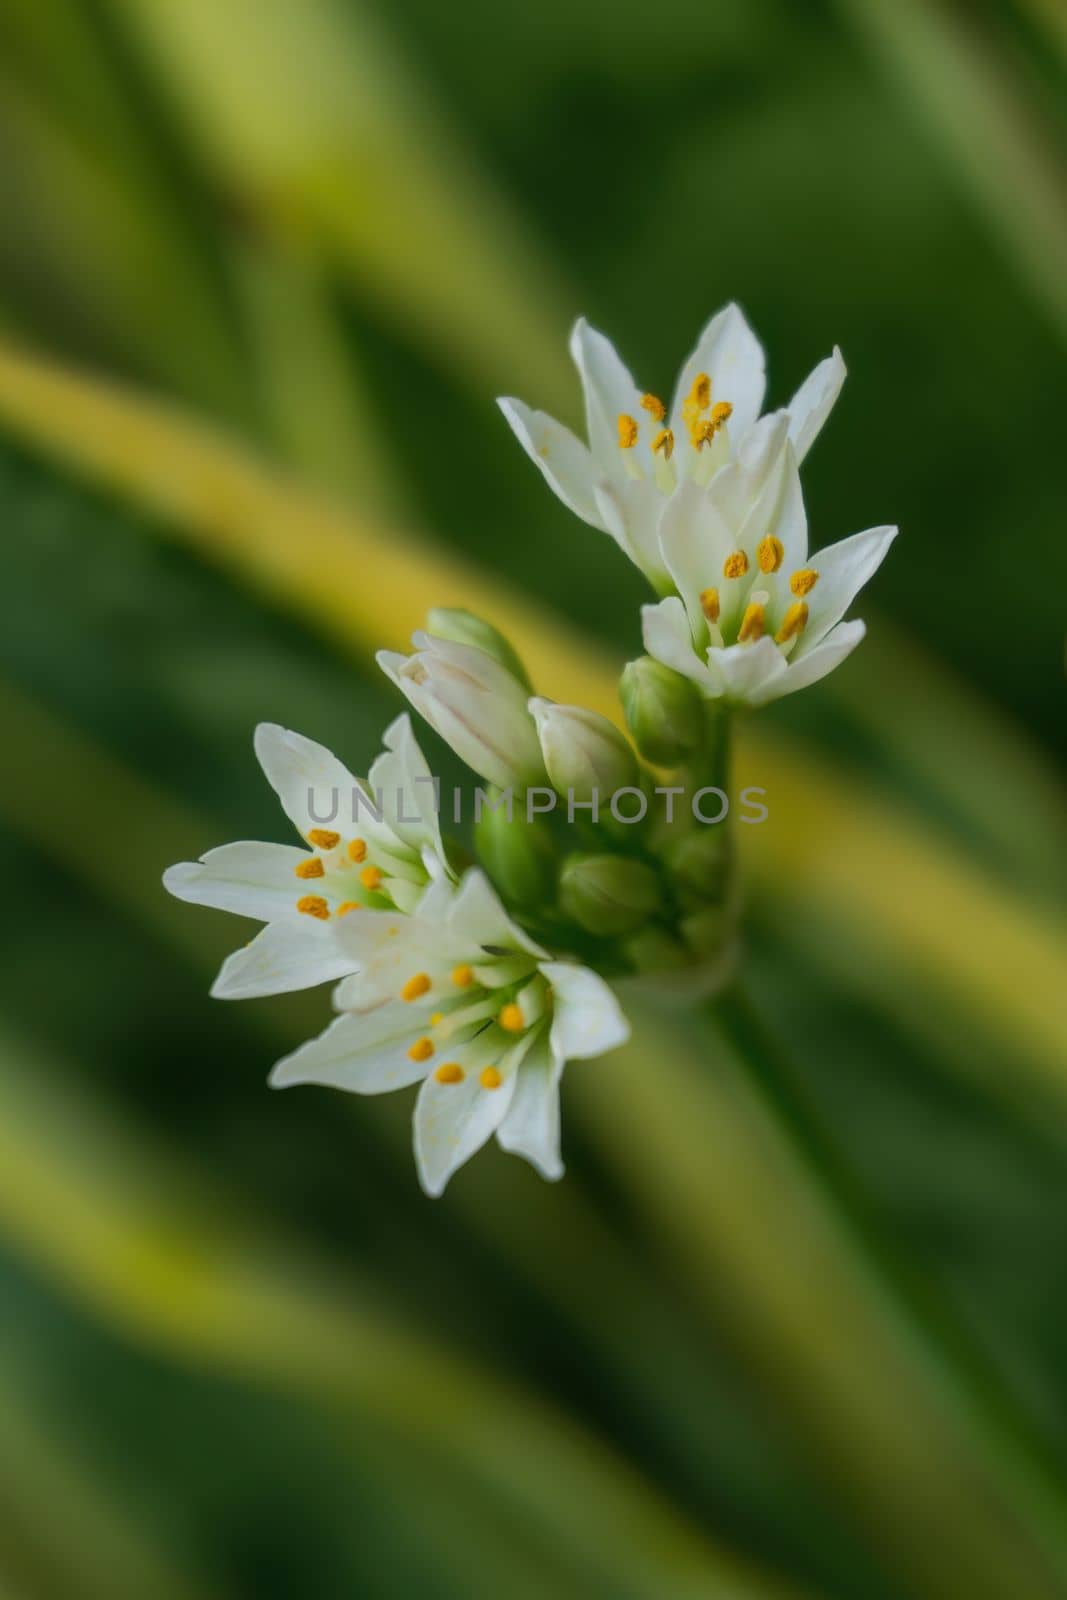 Inflorescence of white Allium zebdanense wild ornamental onion flowers close up on a blurry green background